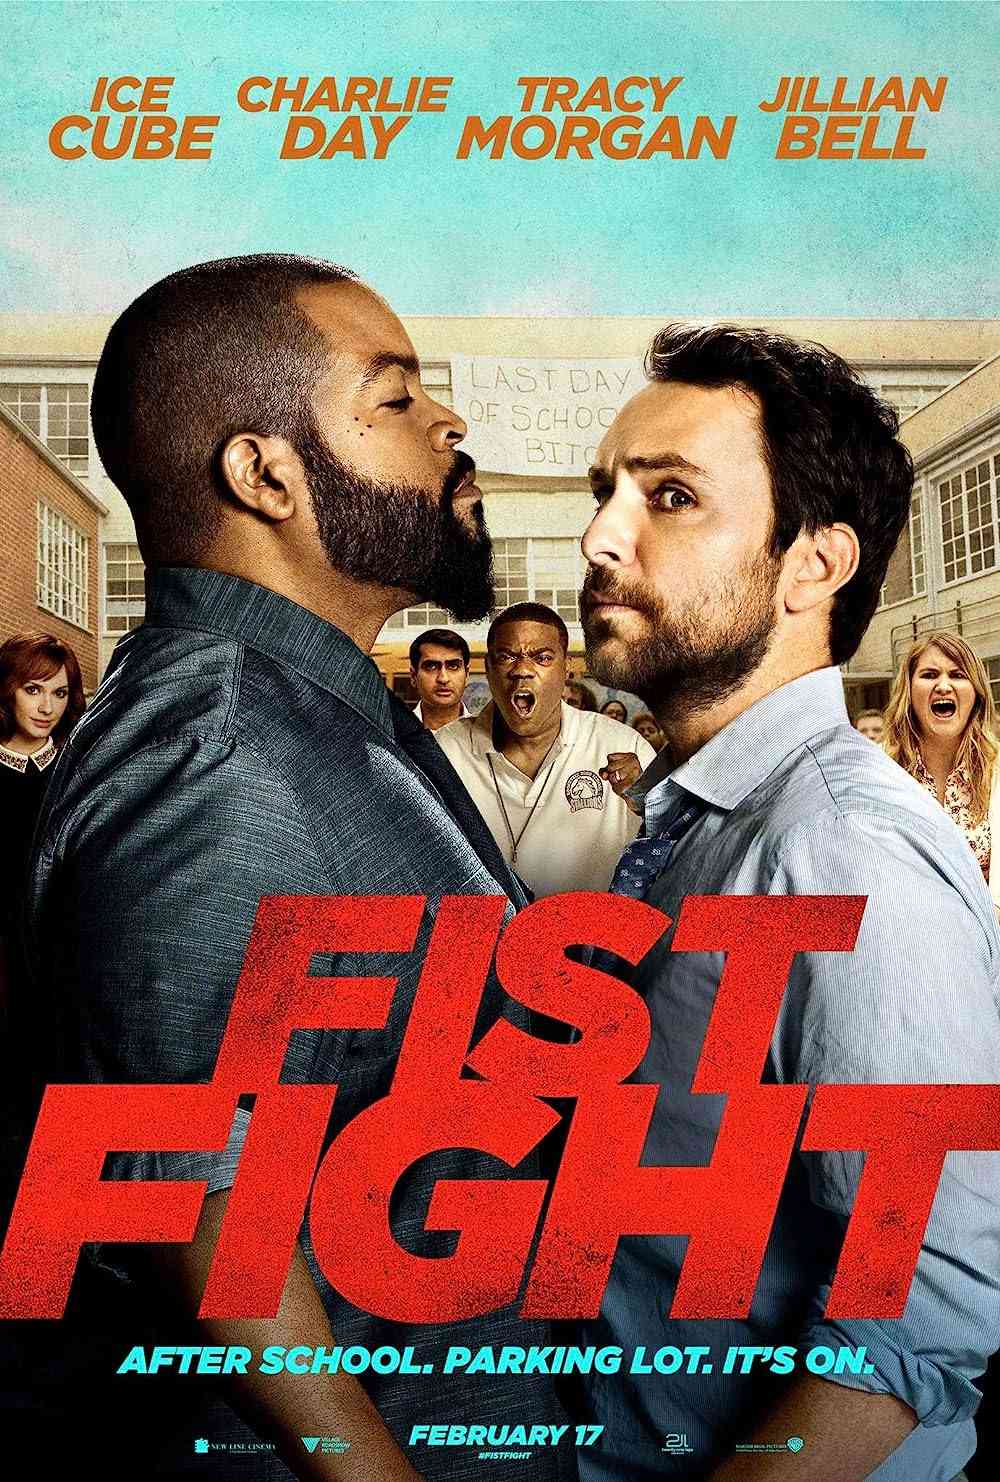 FULL MOVIE: Fist Fight (2017) [Comedy]